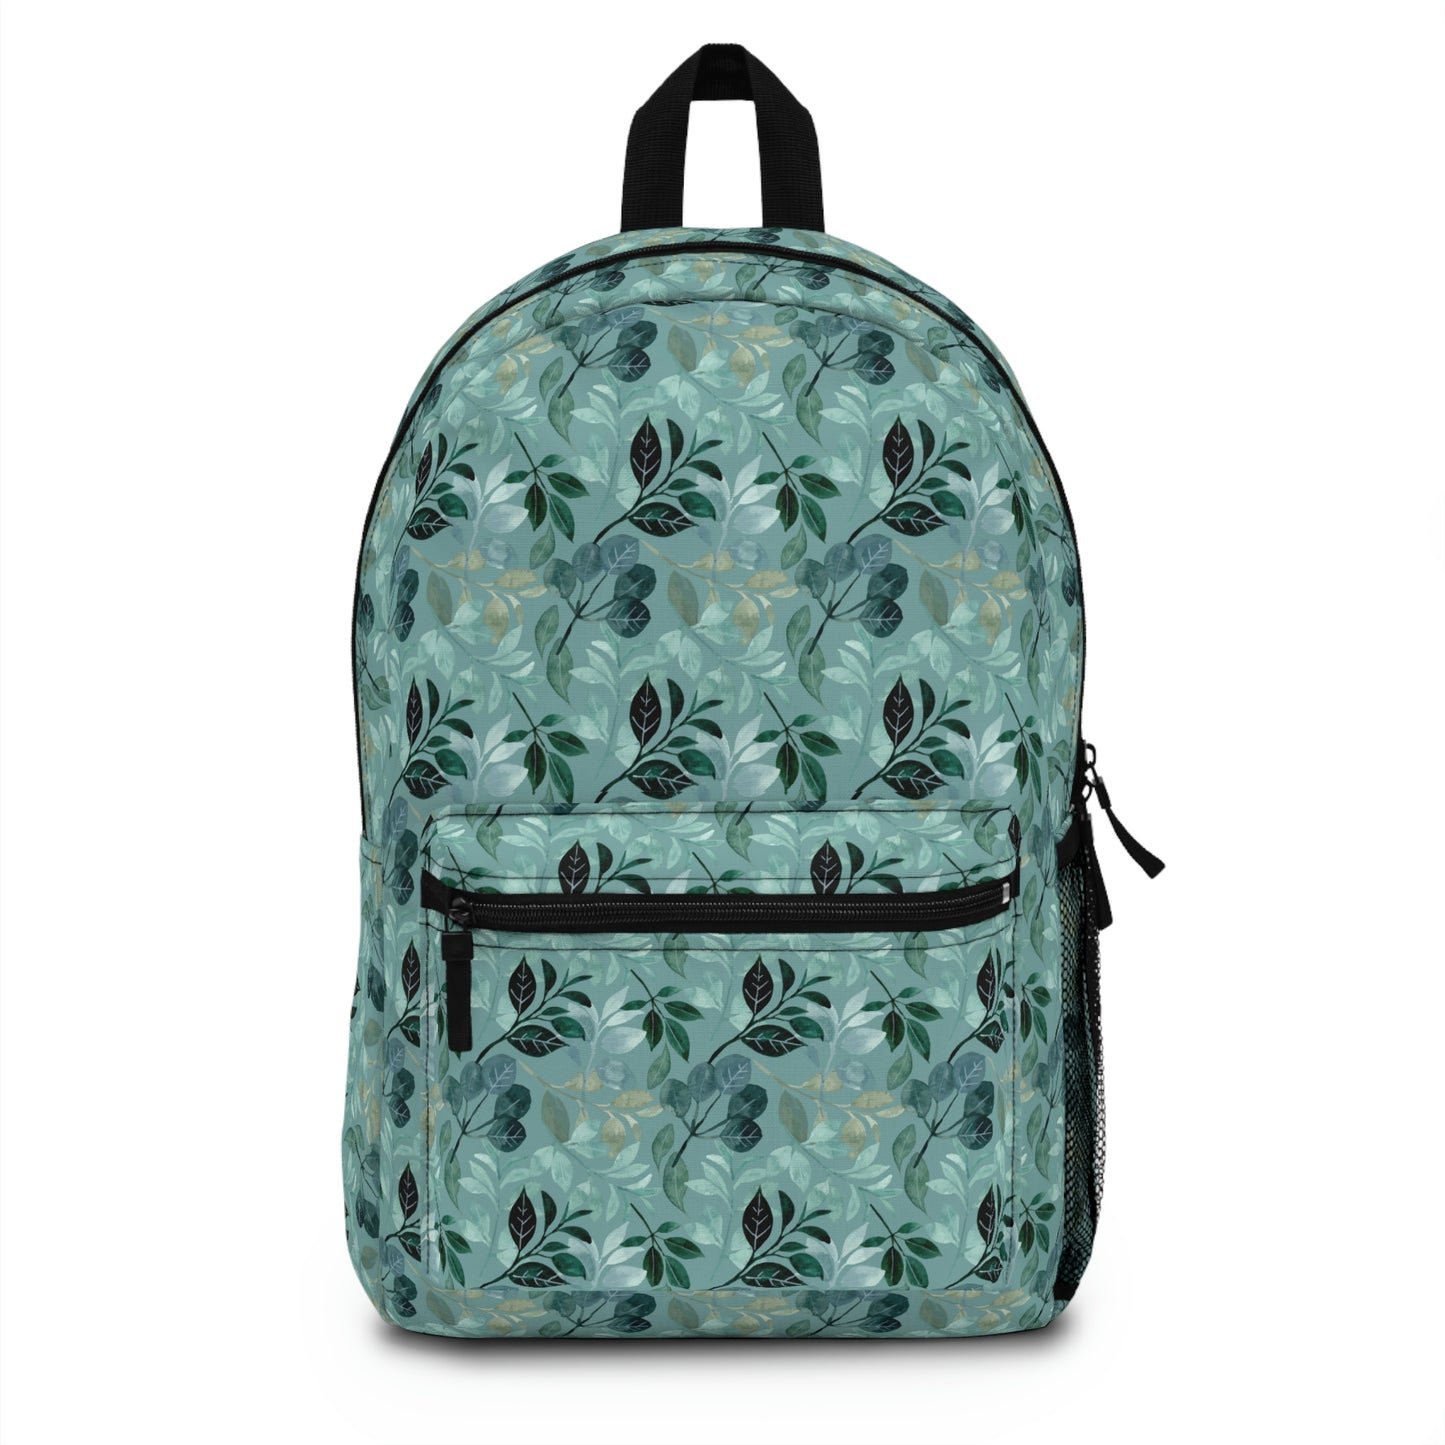 teal leaf backpack for back to school, gym, yoga or travel